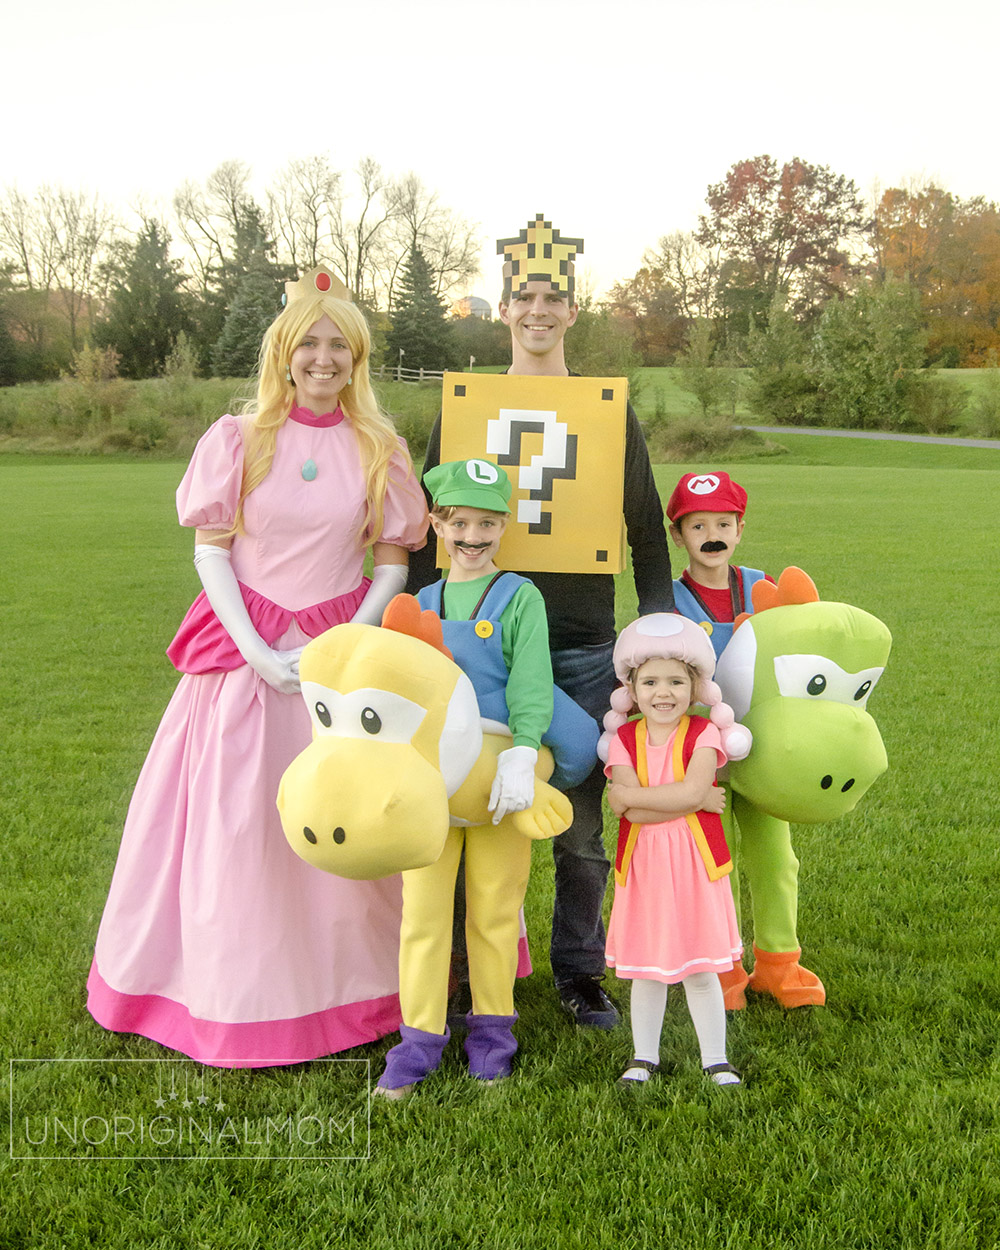 DIY Family Mario Halloween Costumes - Mario riding yoshi, toadette, princess peach, and a question mark block!